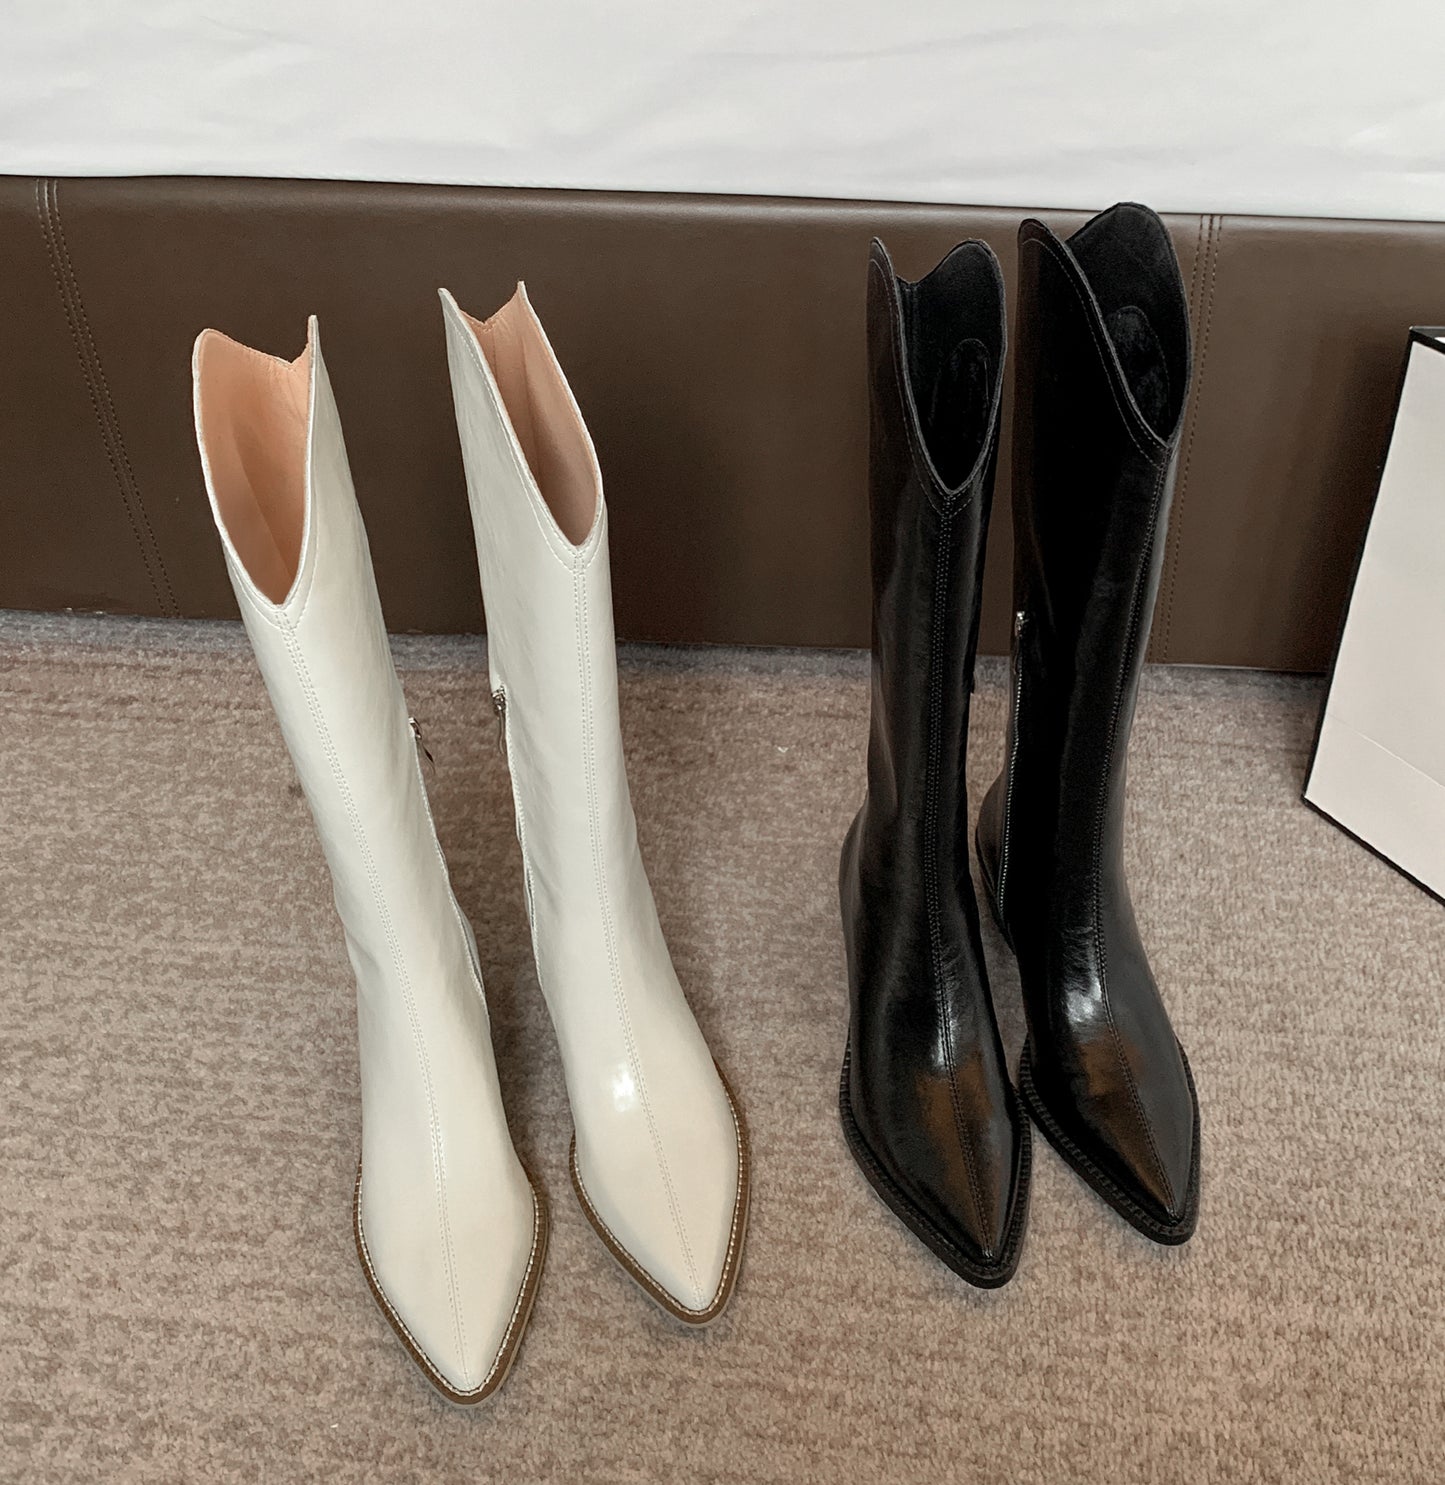 TinaCus Women's Handmade Genuine Leather Pointed Toe Comfort Mid Block Heel Side Half Zip Up Cowboy Knee High Boots